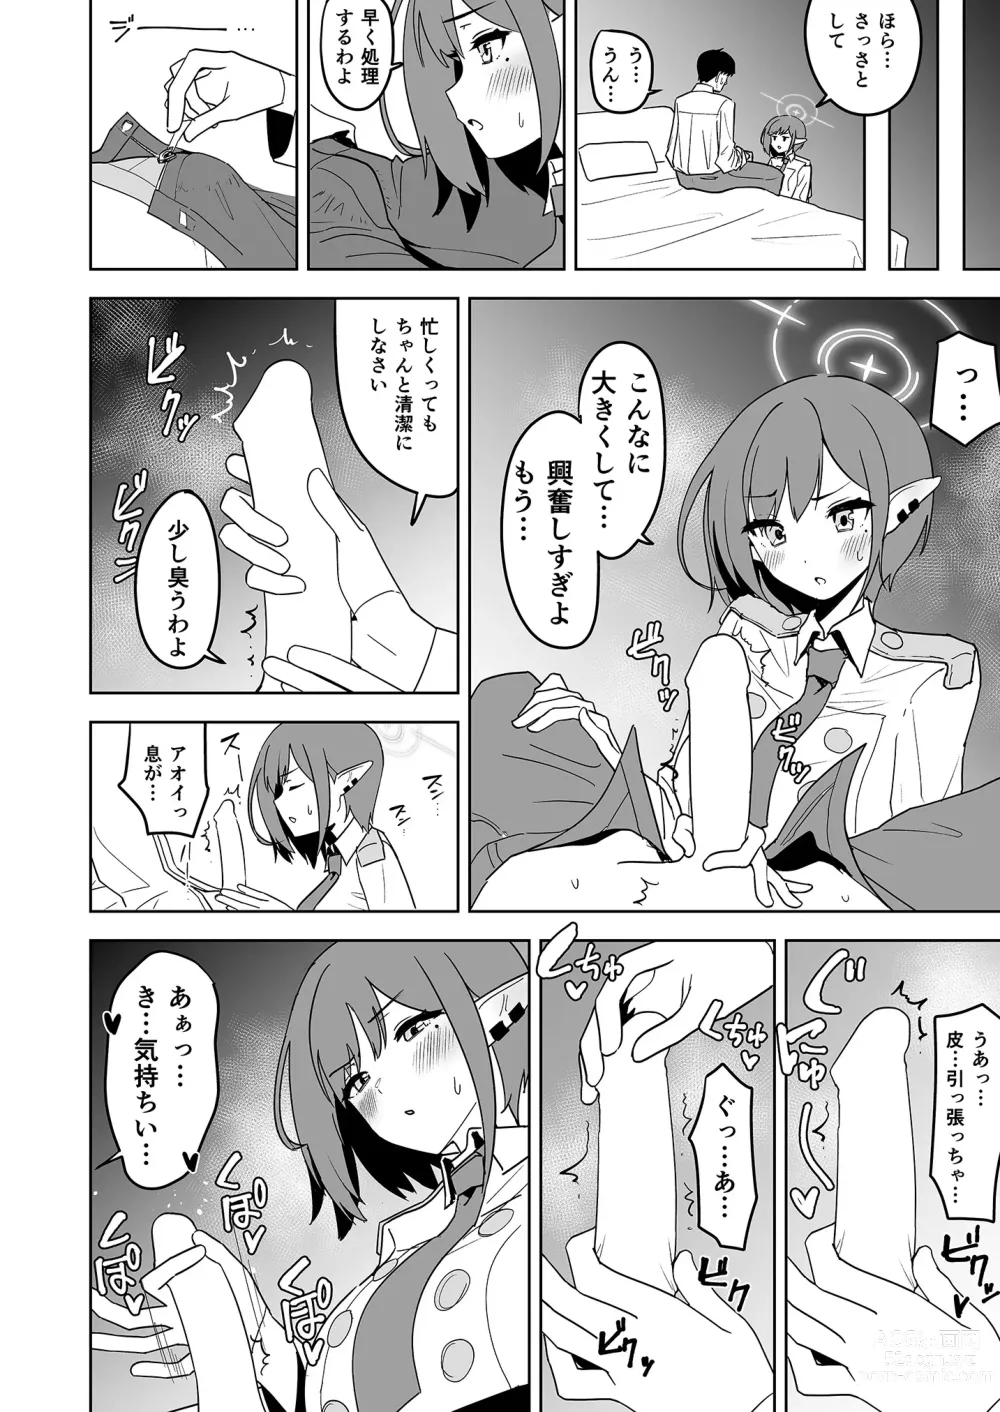 Page 5 of doujinshi Aoi ni Tekoki Shite Moraou - Lets Aoi give you a hand job.